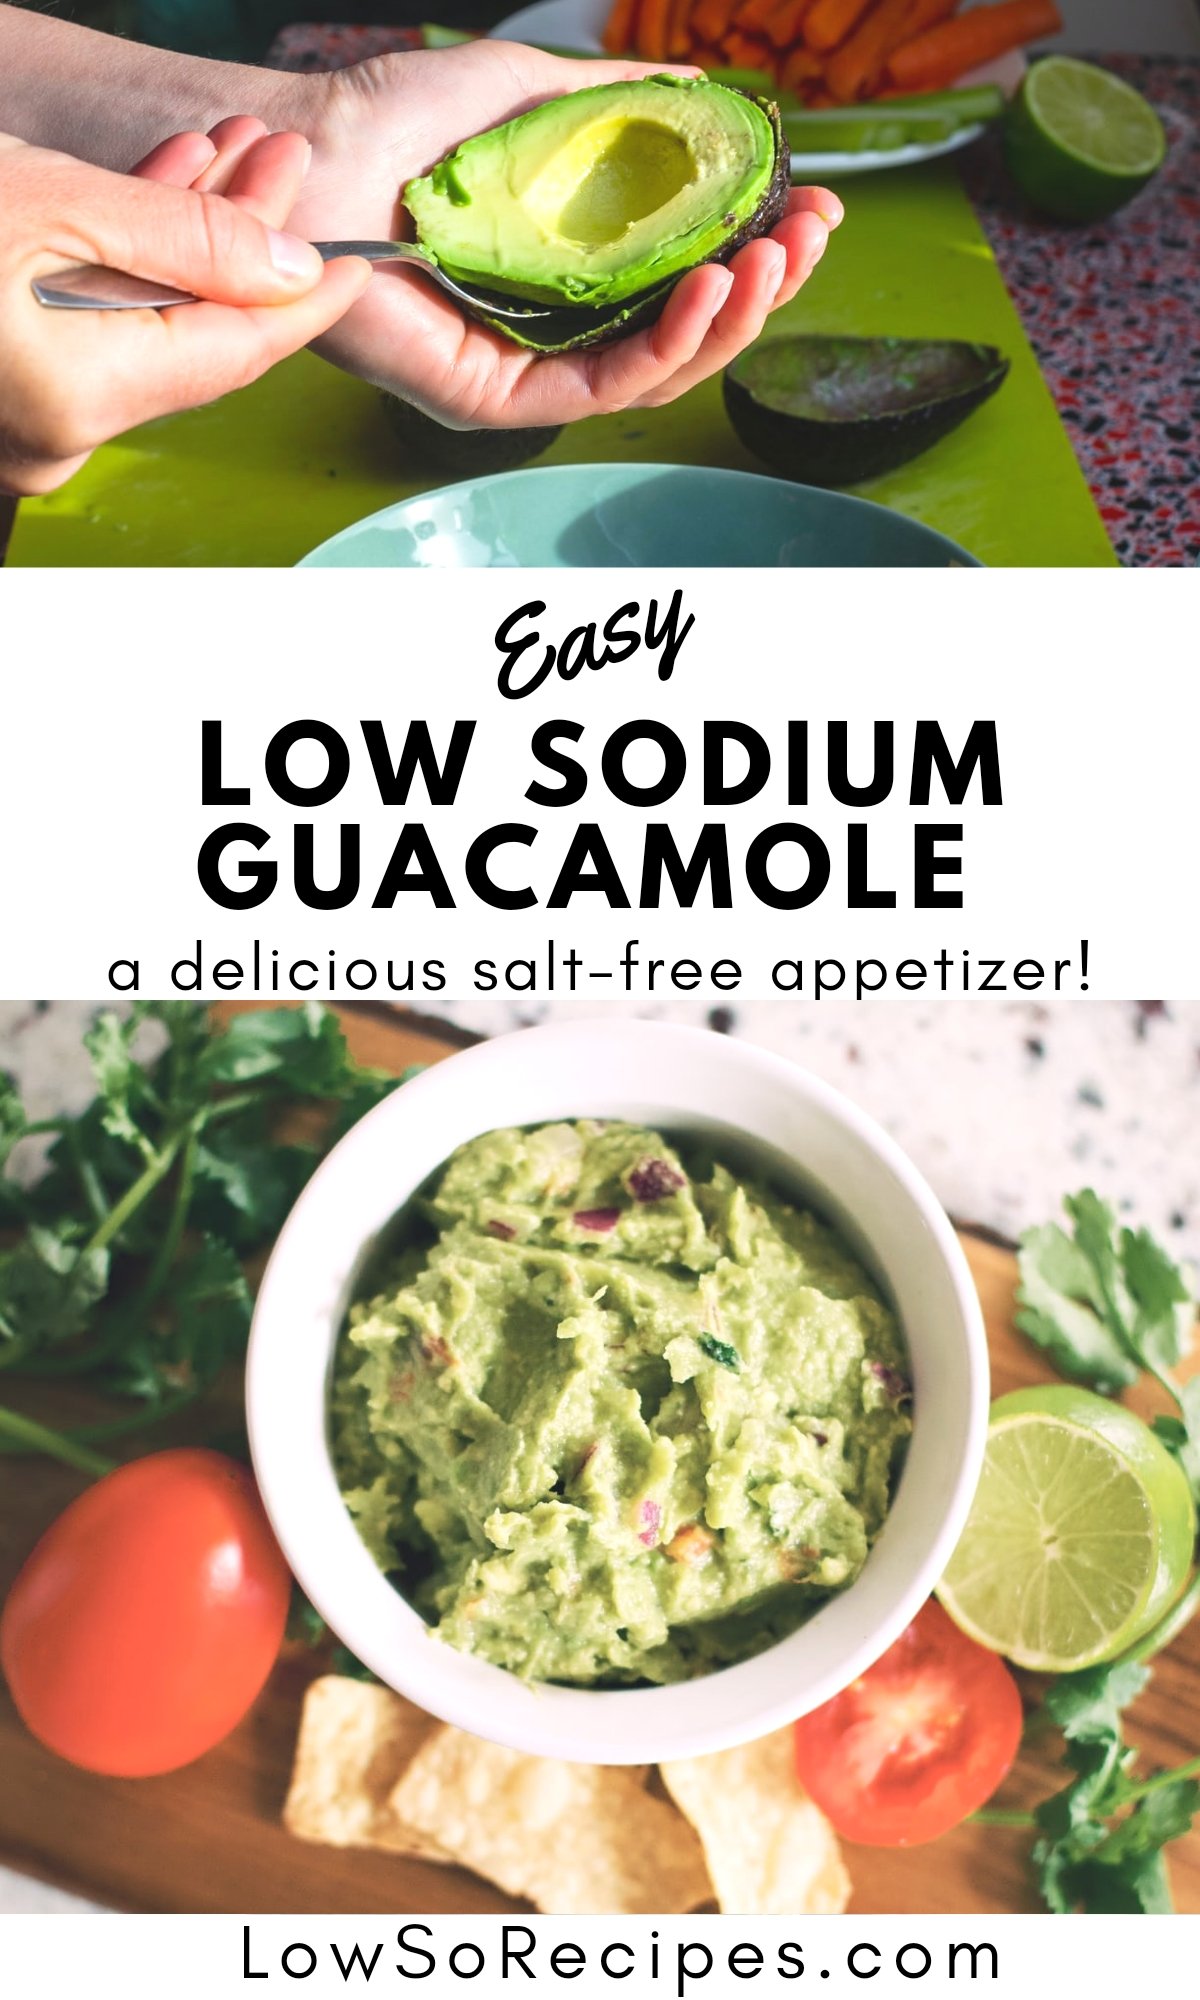 guacamole low sodium salt free snacks with avocado onions cilantro and lime juice